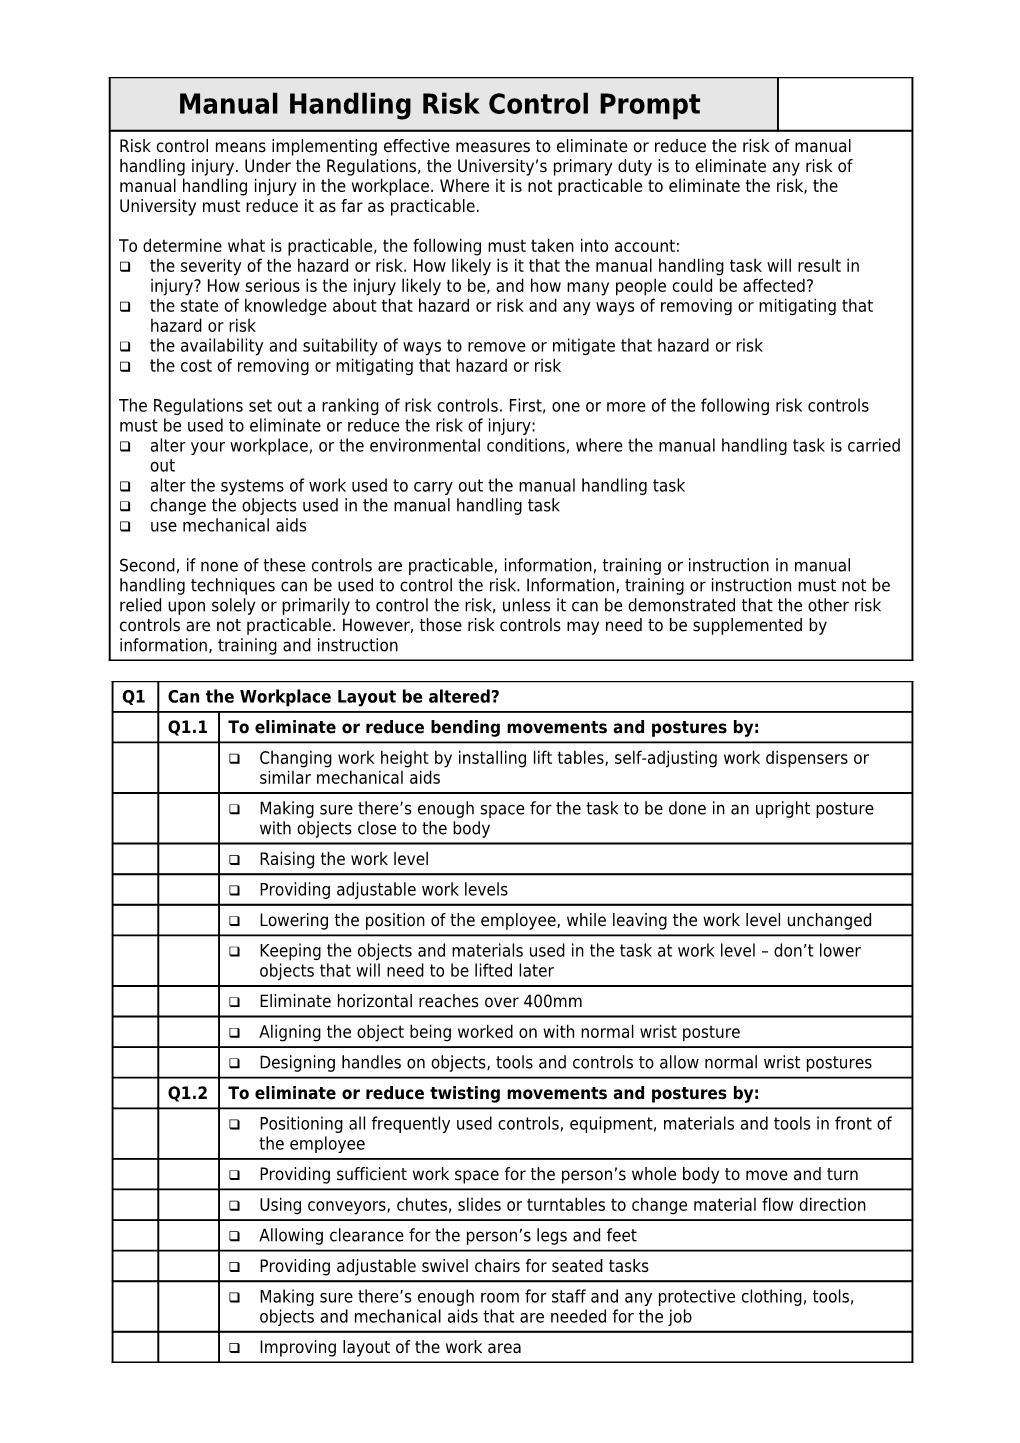 Manual Handling Risk Control Prompt Sheetpage 1